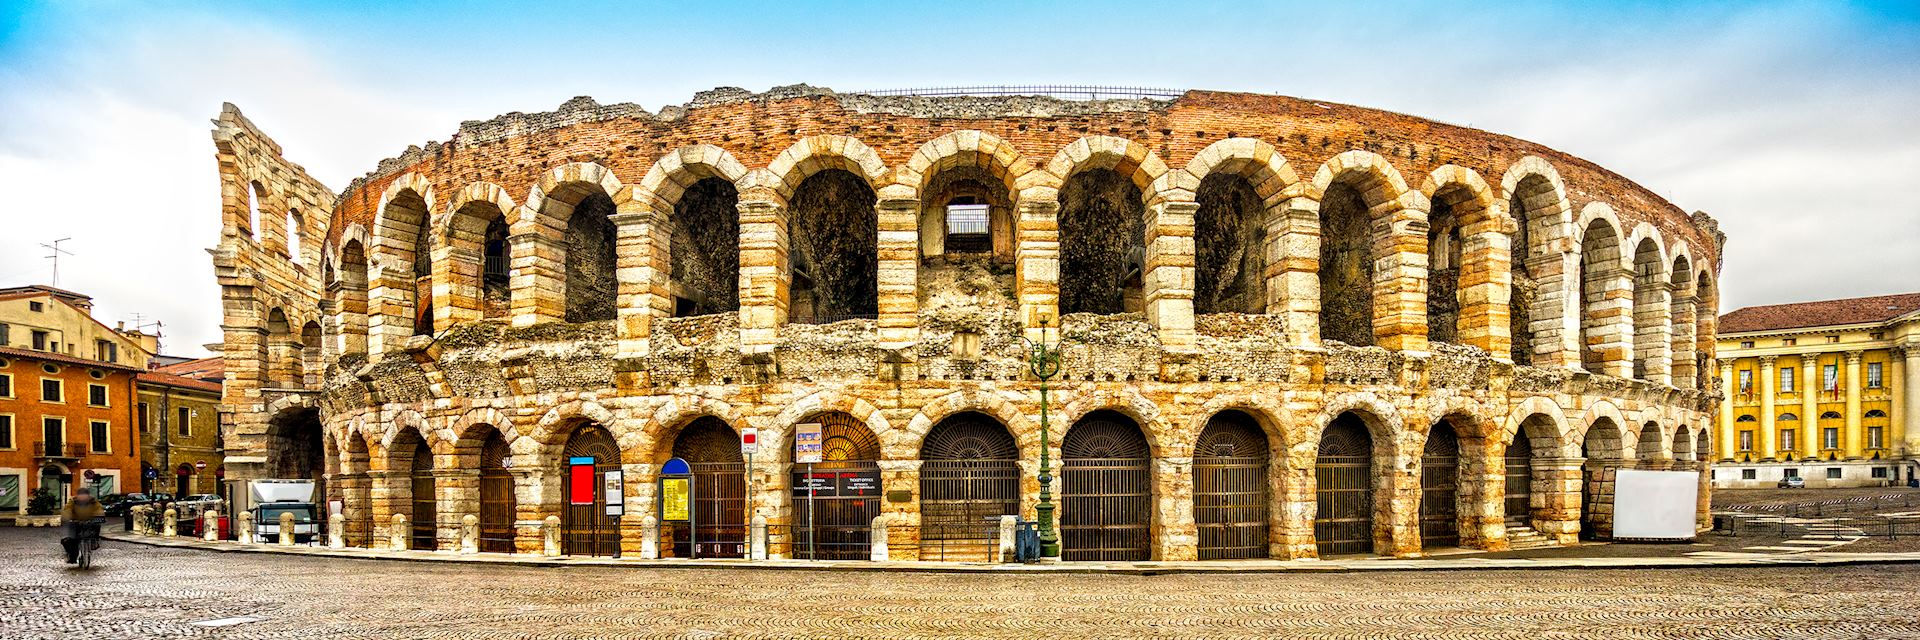 Amphitheatre in Verona